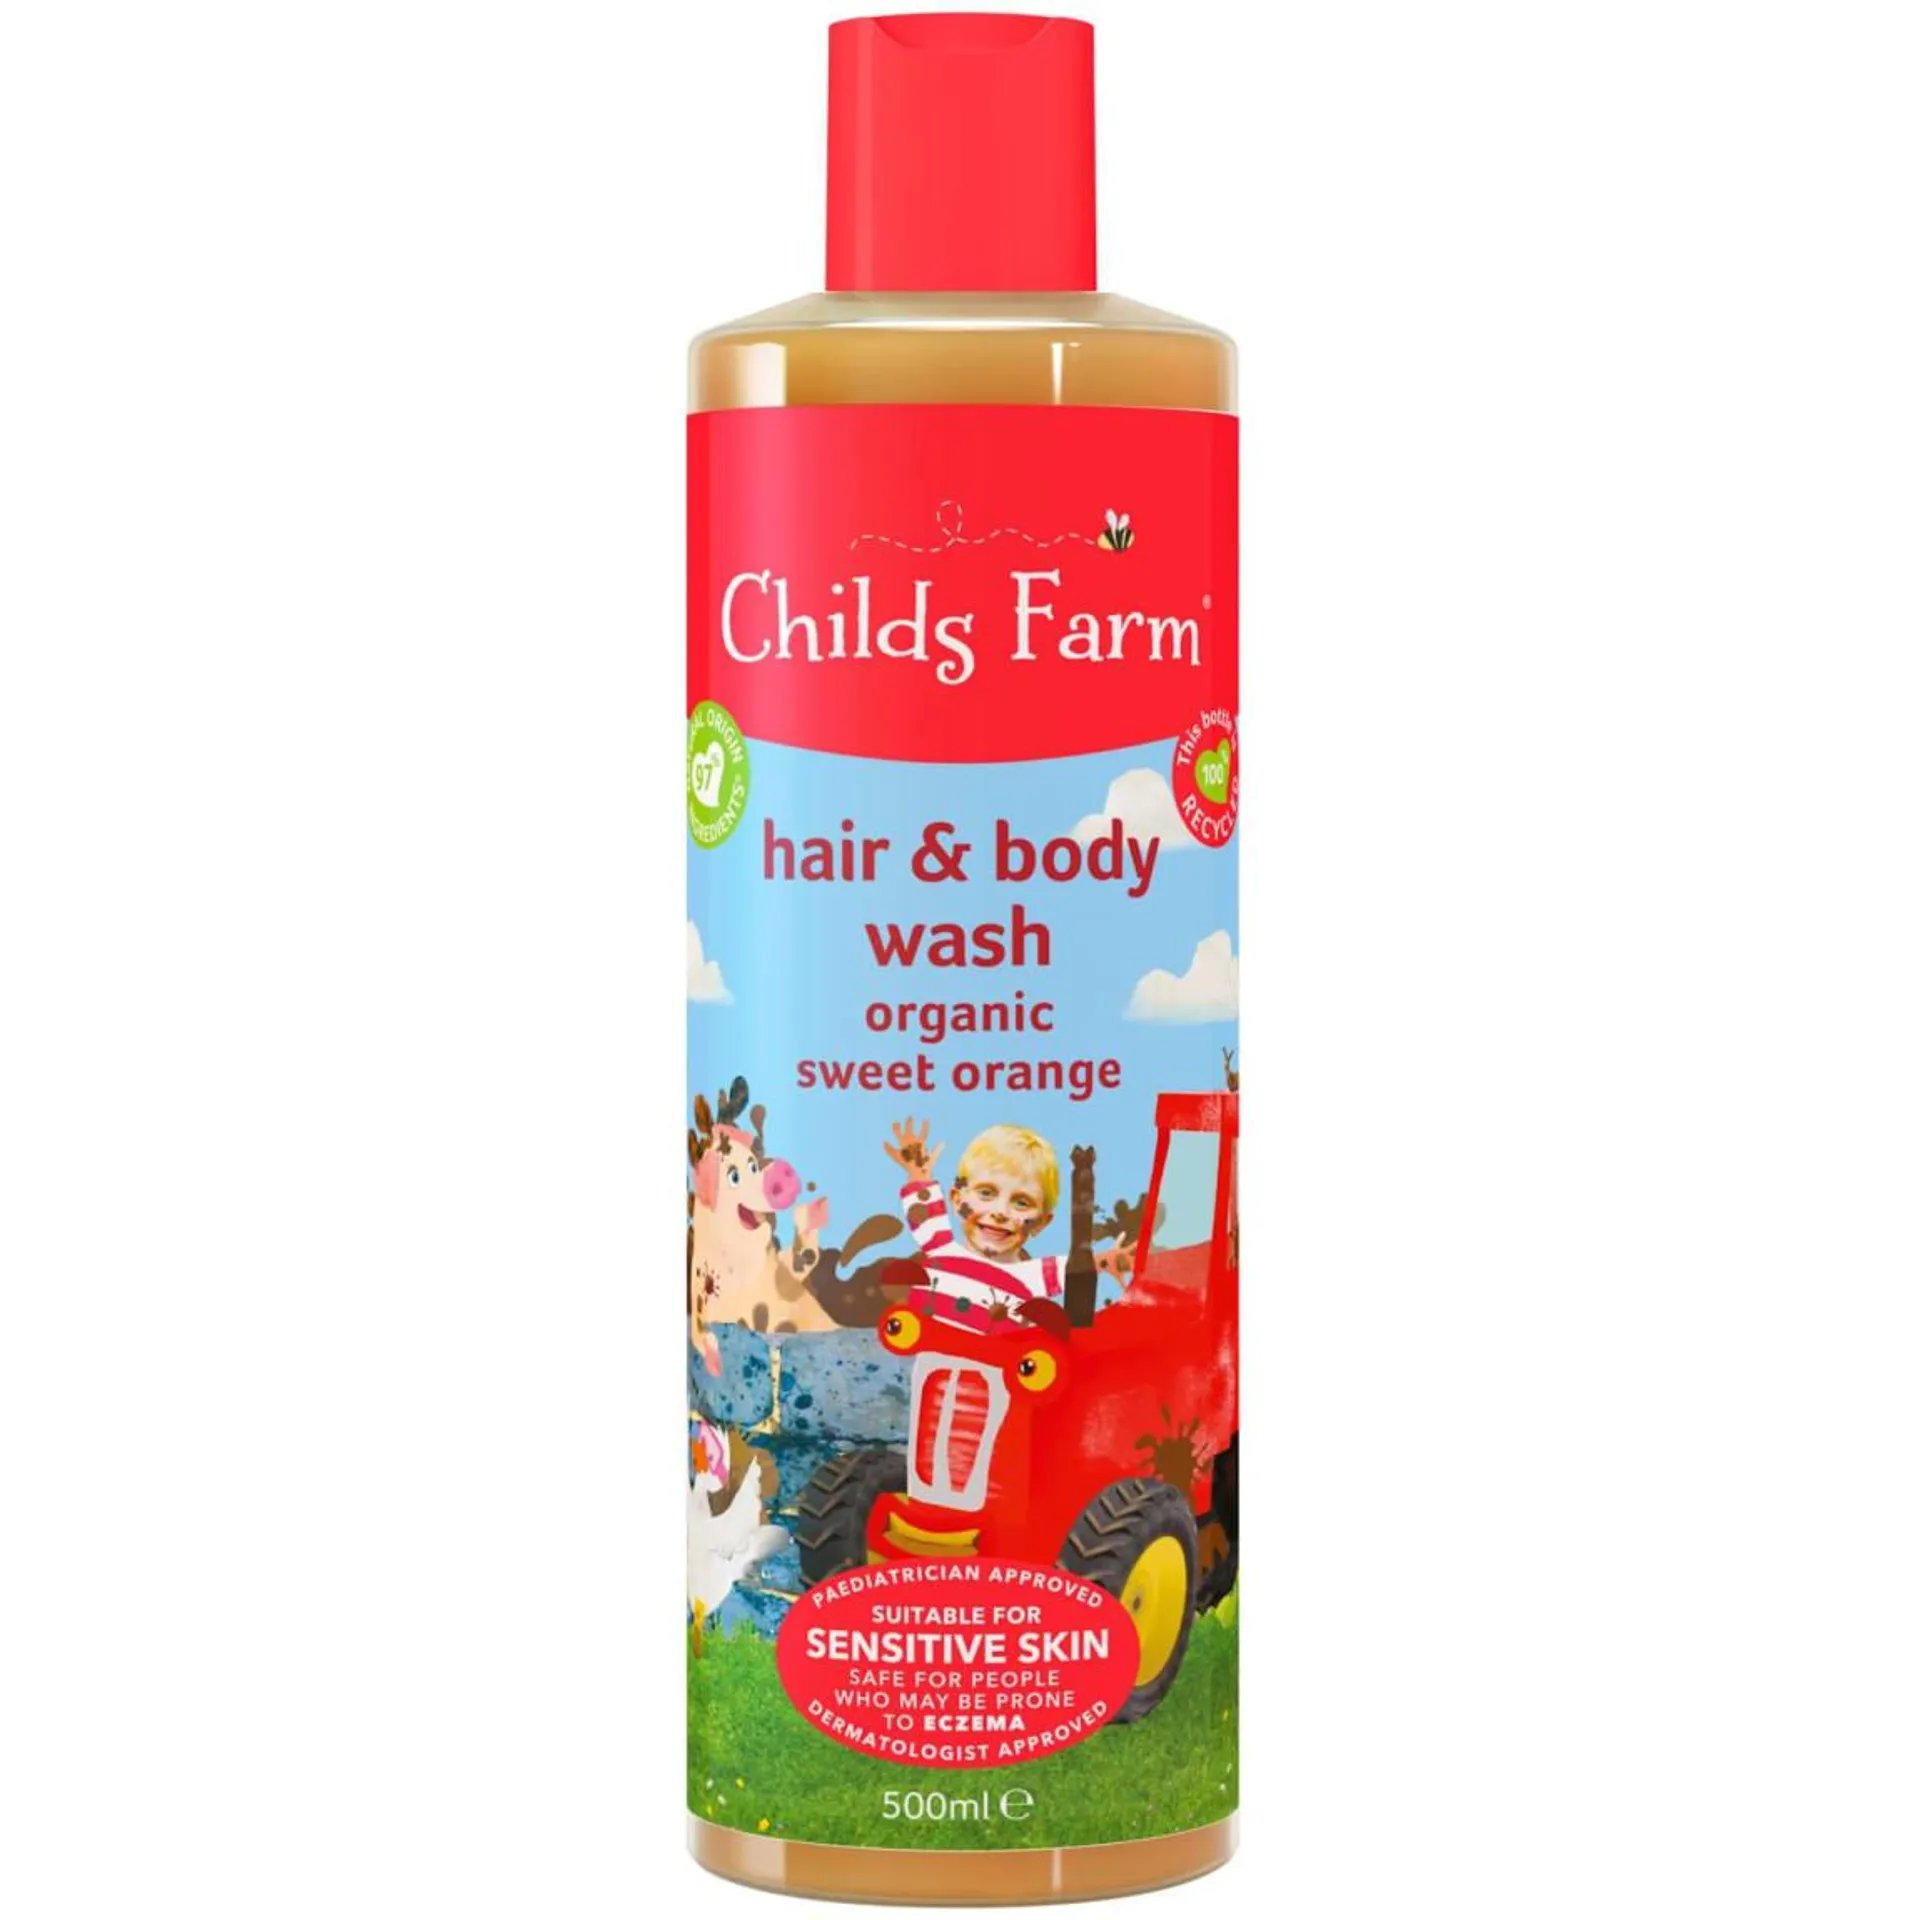 Childs Farm Hair & Body Wash 500ml - Organic Sweet Orange